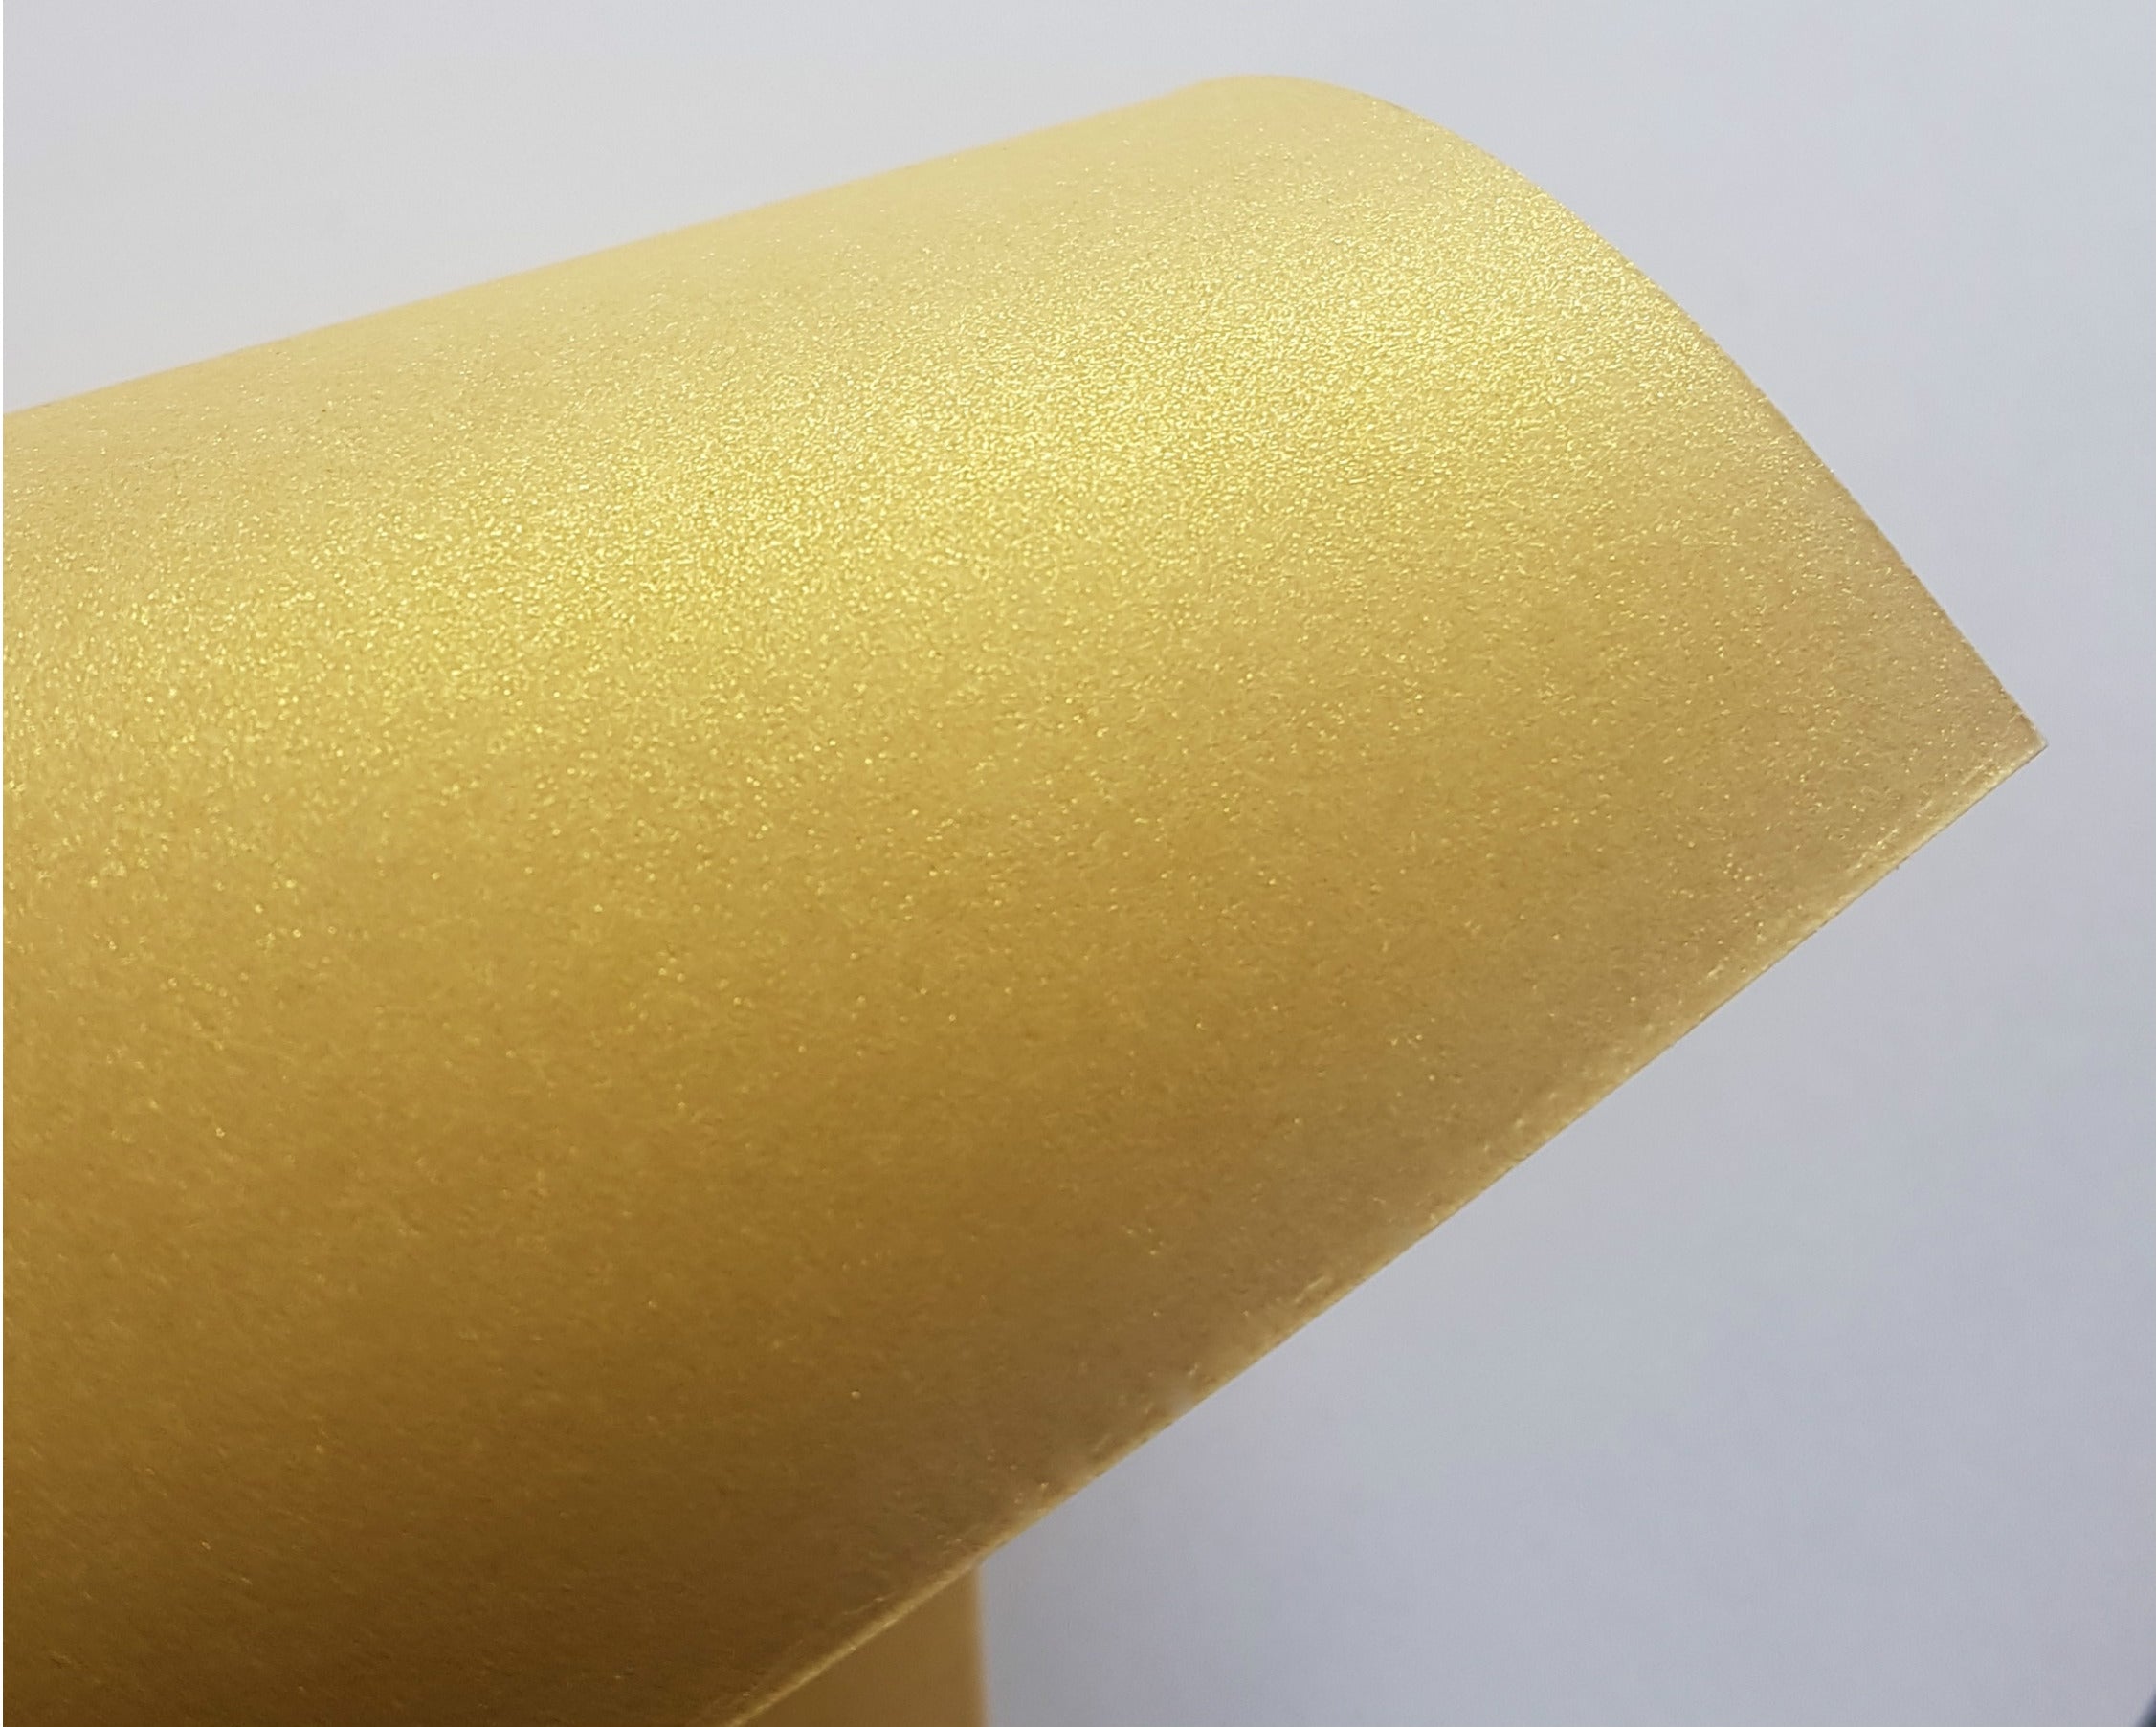 Papel Perolado Golden (Colorido Na Massa) 20 folhas A4 - 180g - Papel Especial